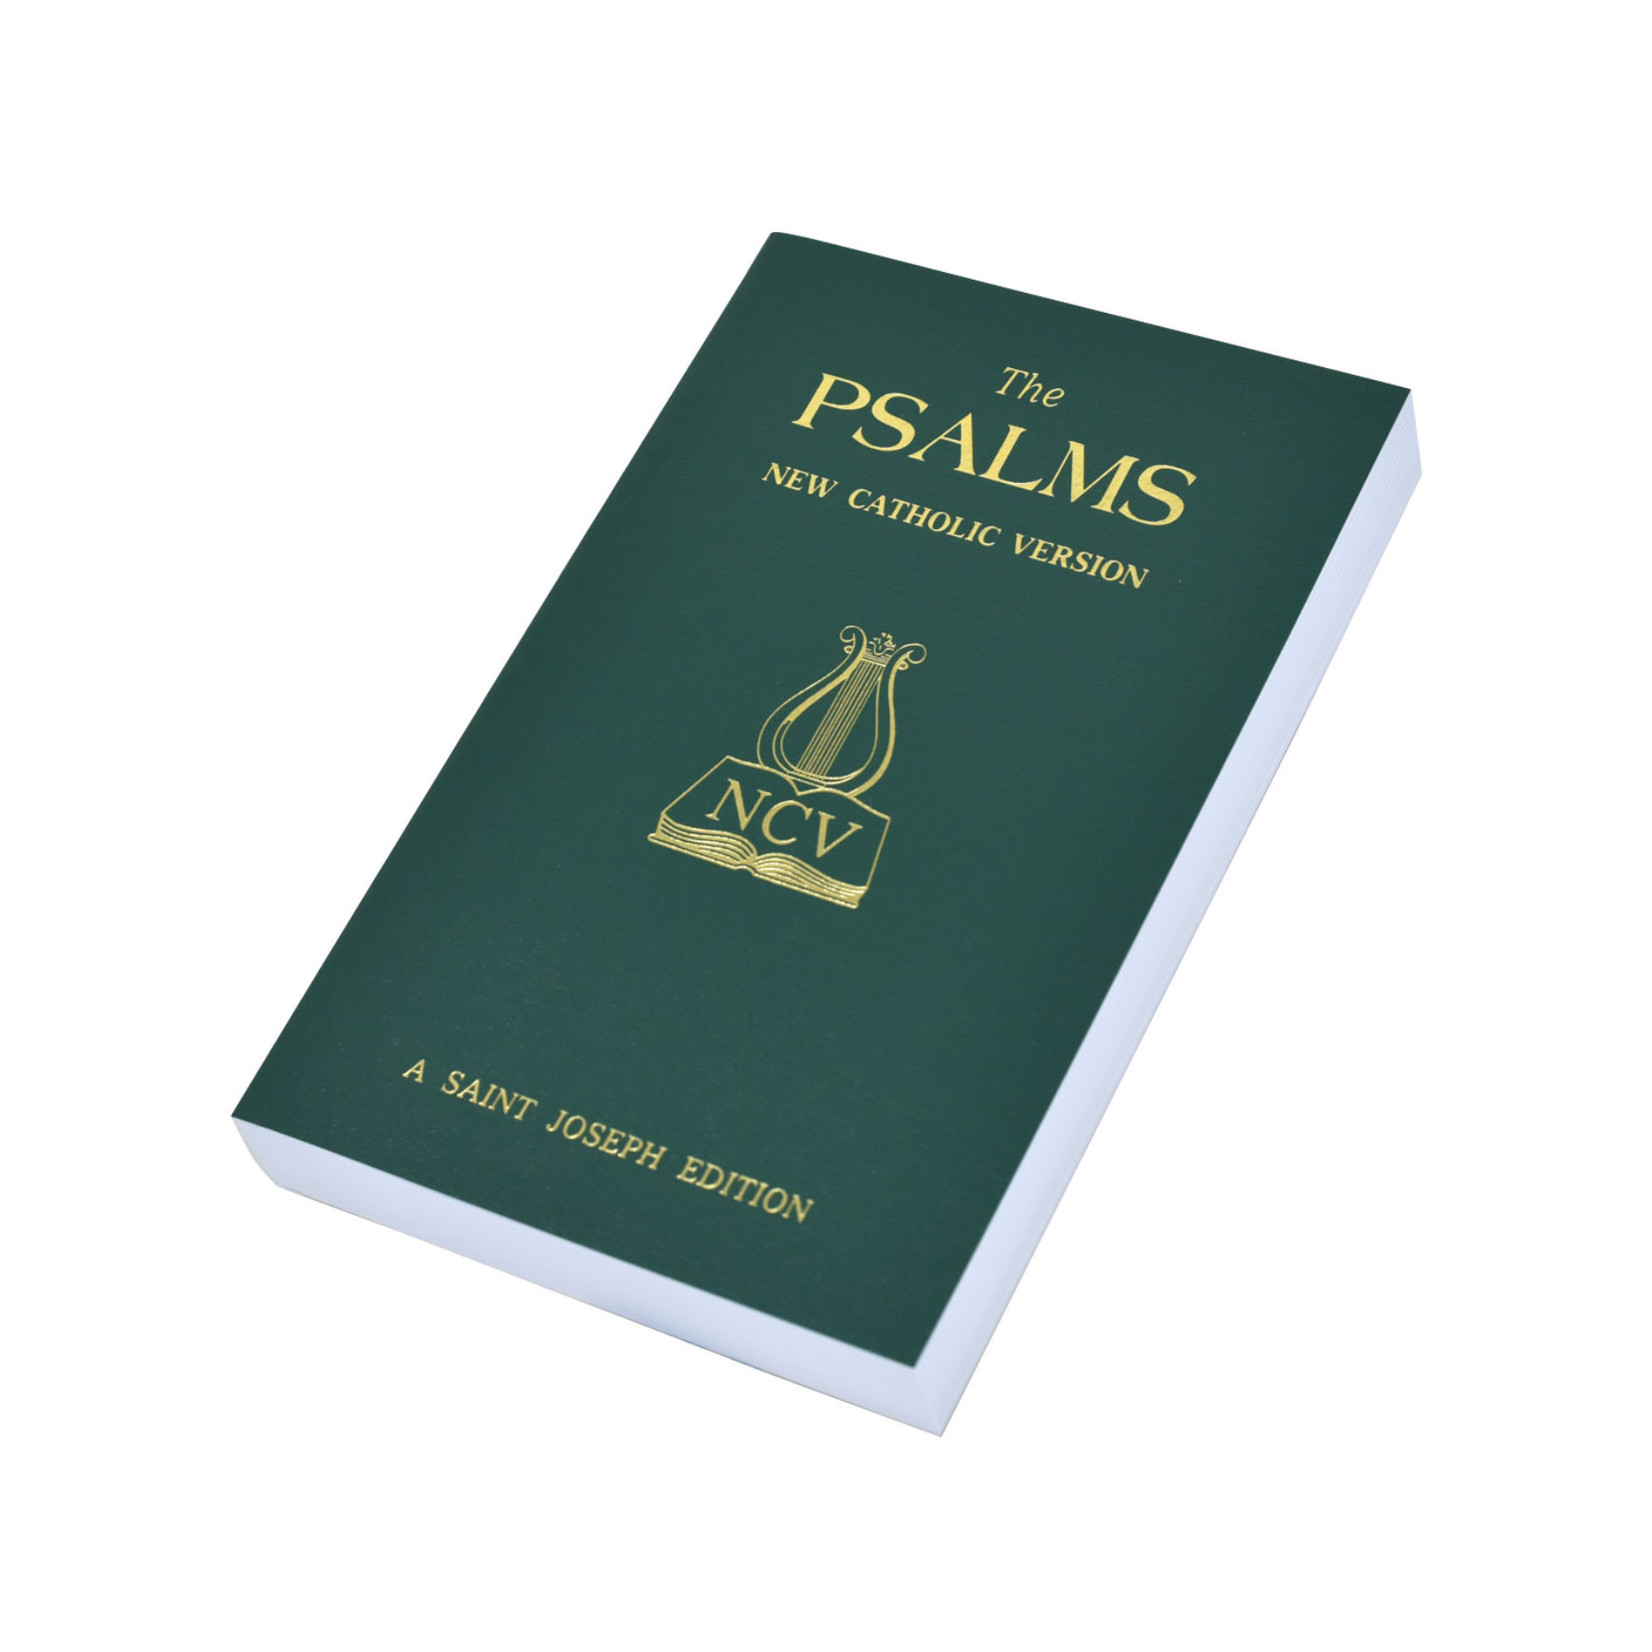 The Psalms New Catholic Version